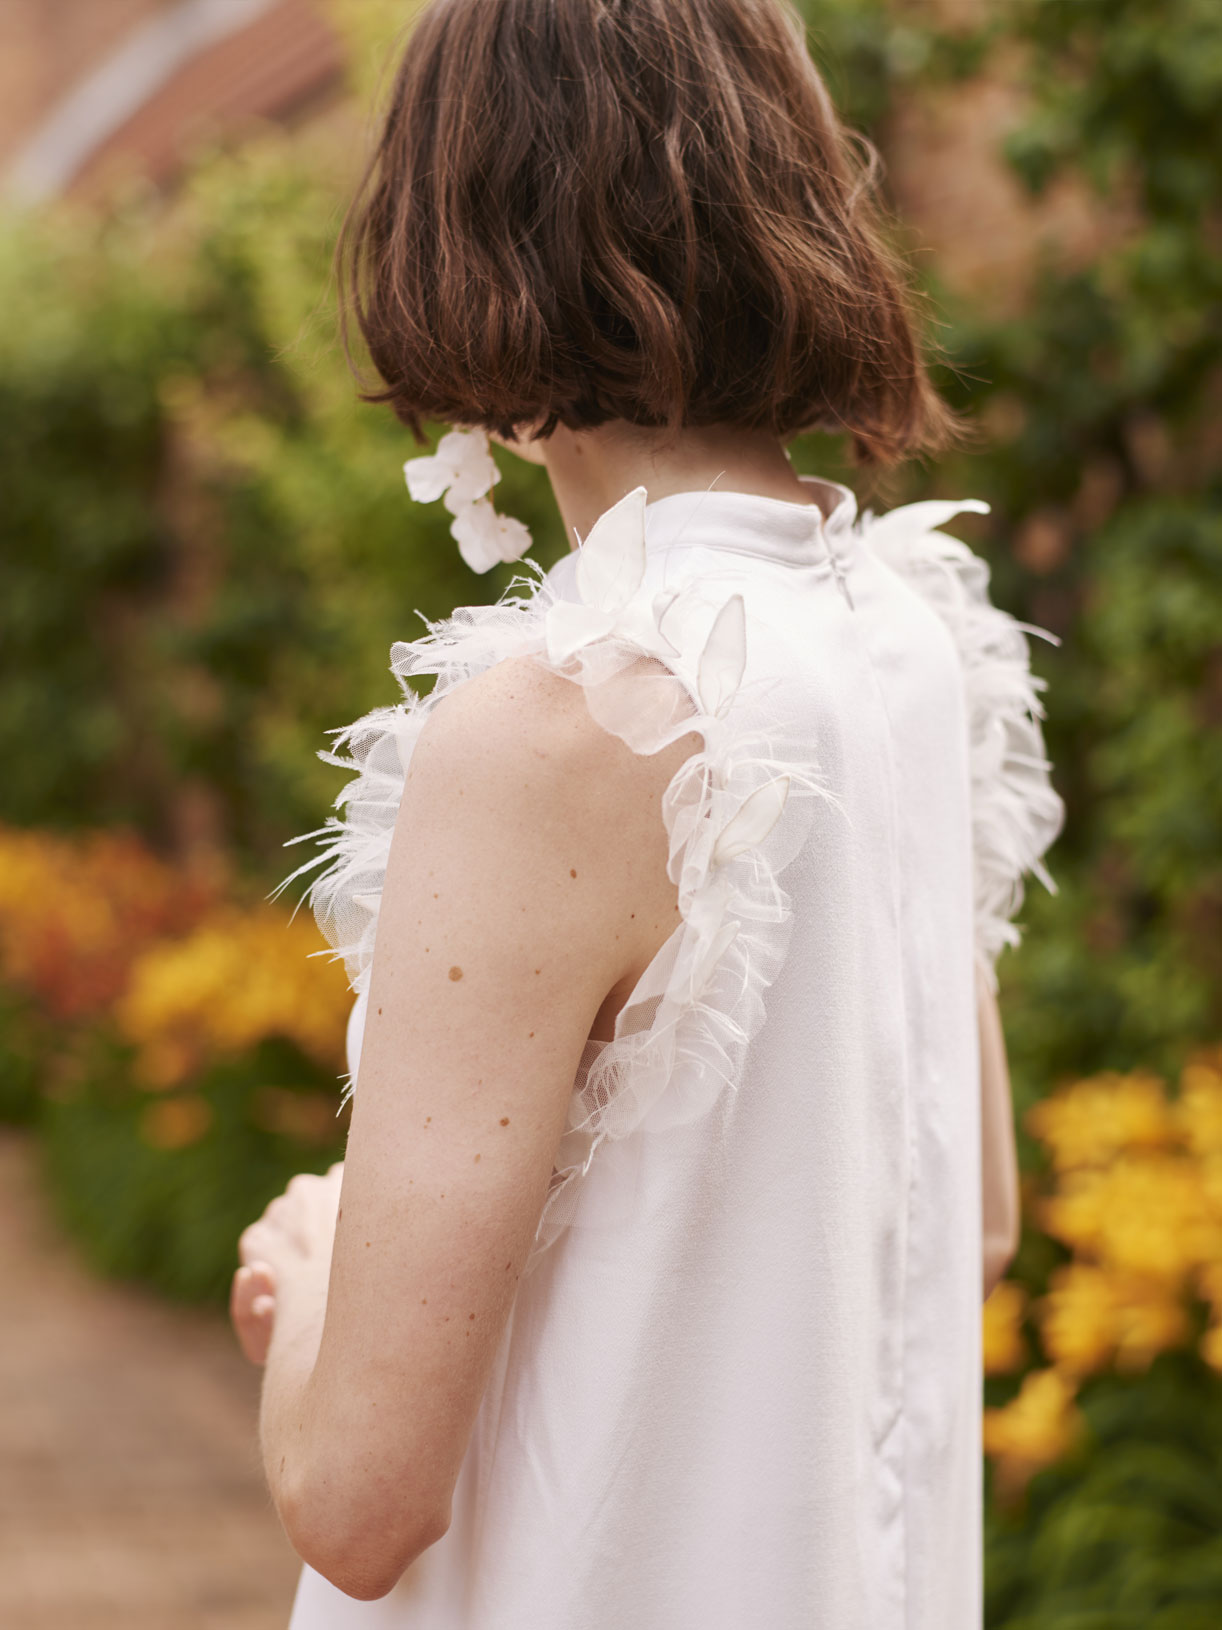 Créatrice de robe de mariée romantique sur-mesure recyclee - Myphilo